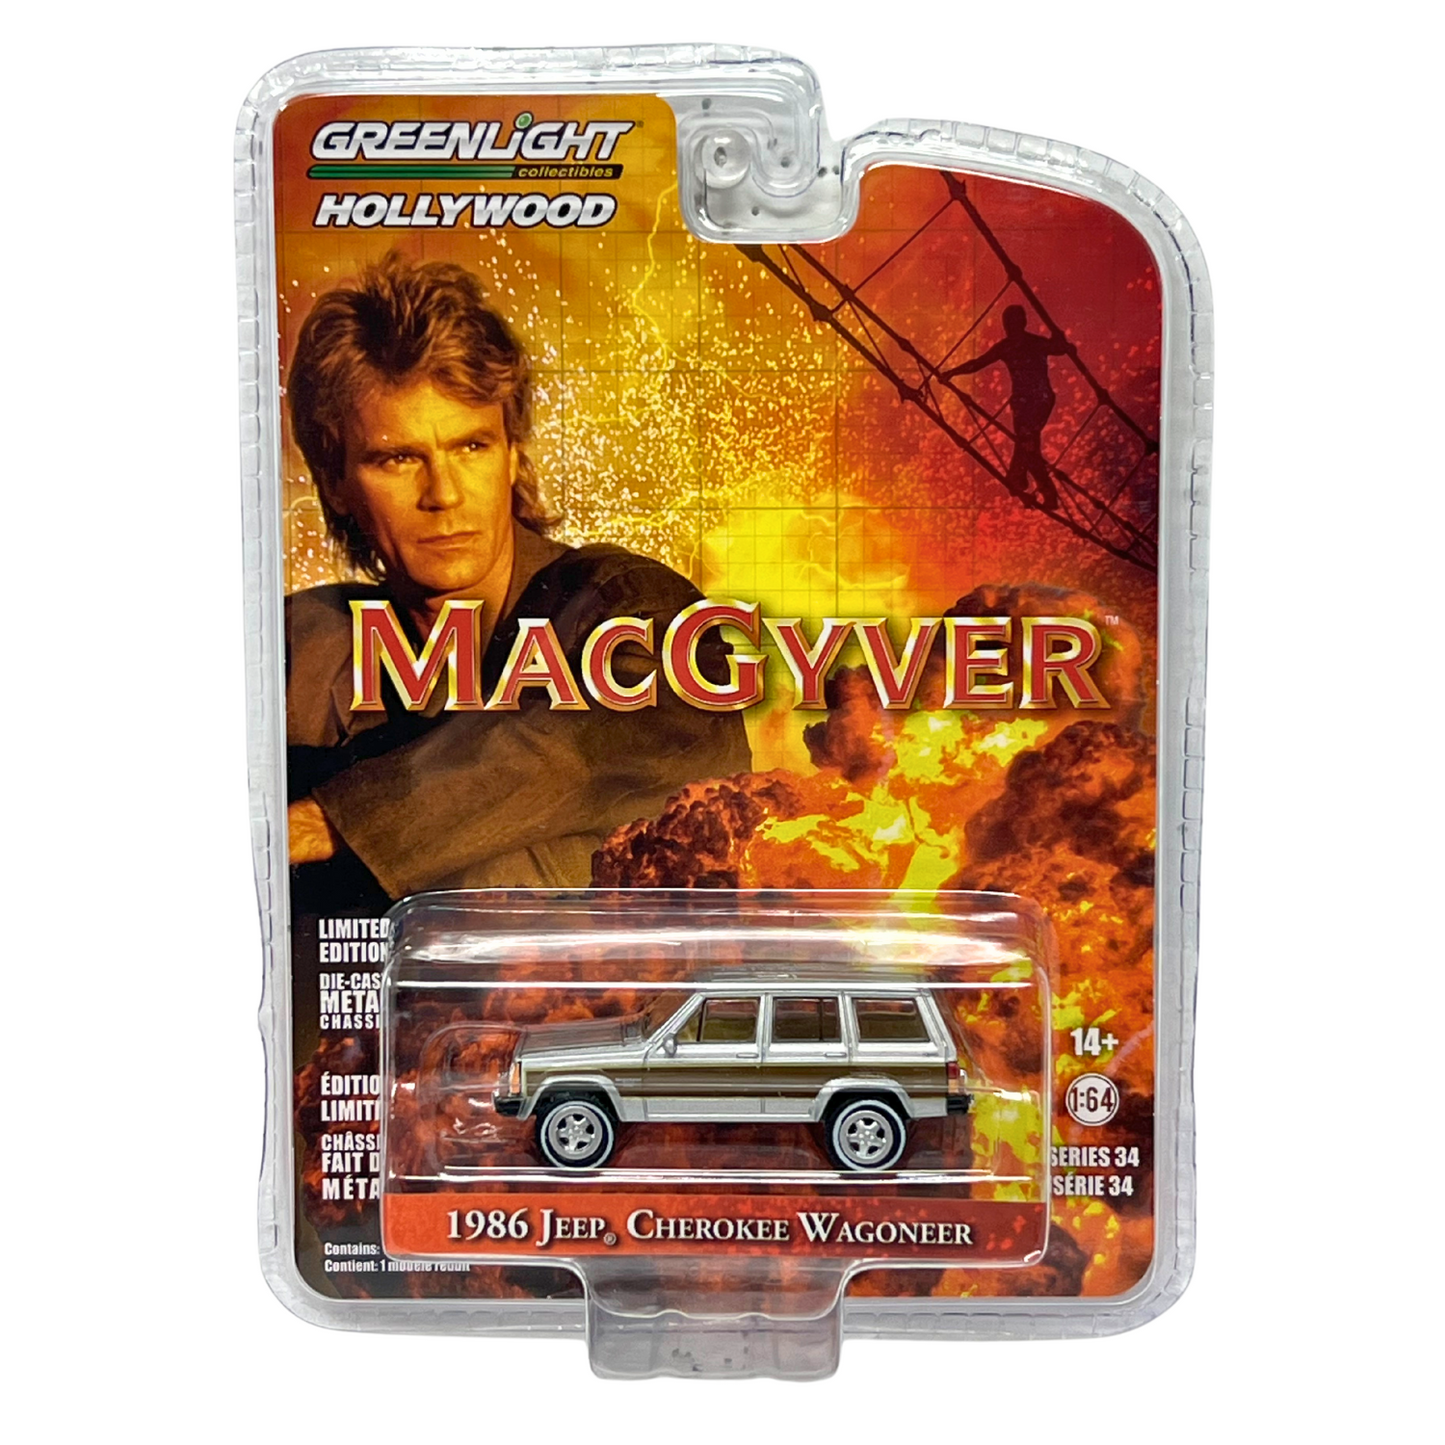 Greenlight Hollywood MacGyver 1986 Jeep Cherokee Wagoneer 1:64 Diecast